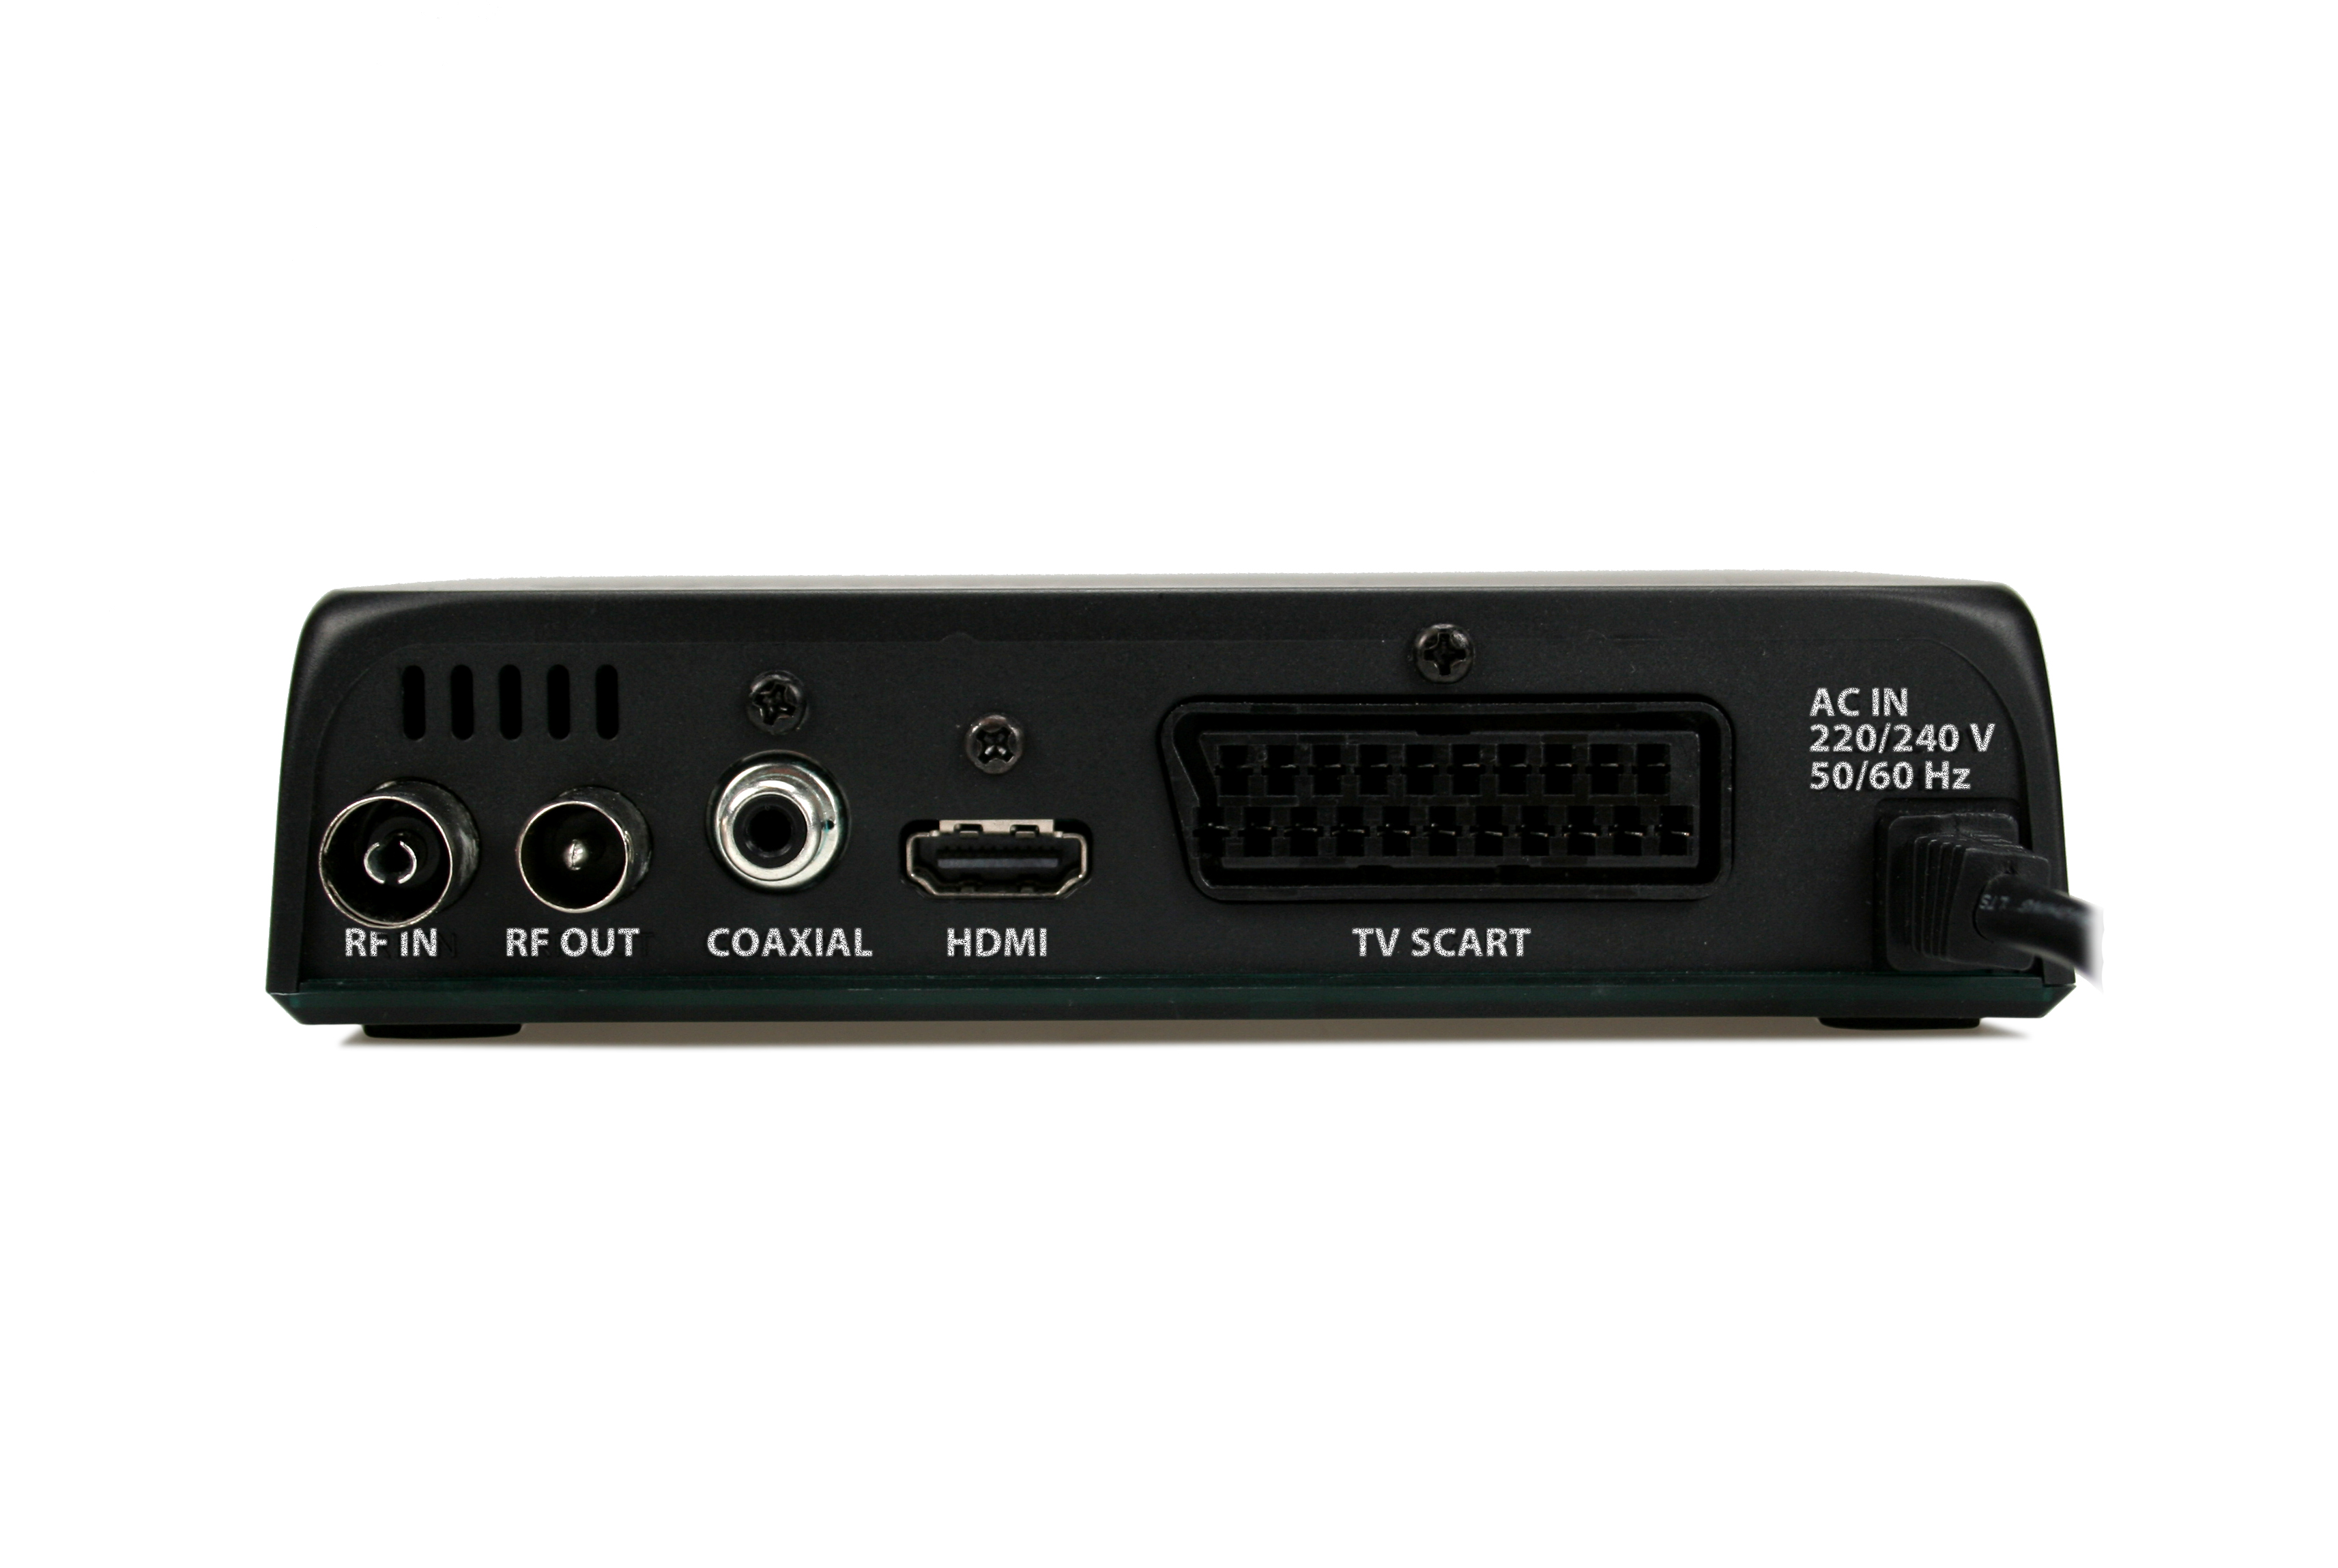 Reproductor multimedia - Sveon SPM810 sintonizador grabador TDT full HD  1080p, reproductor MKV